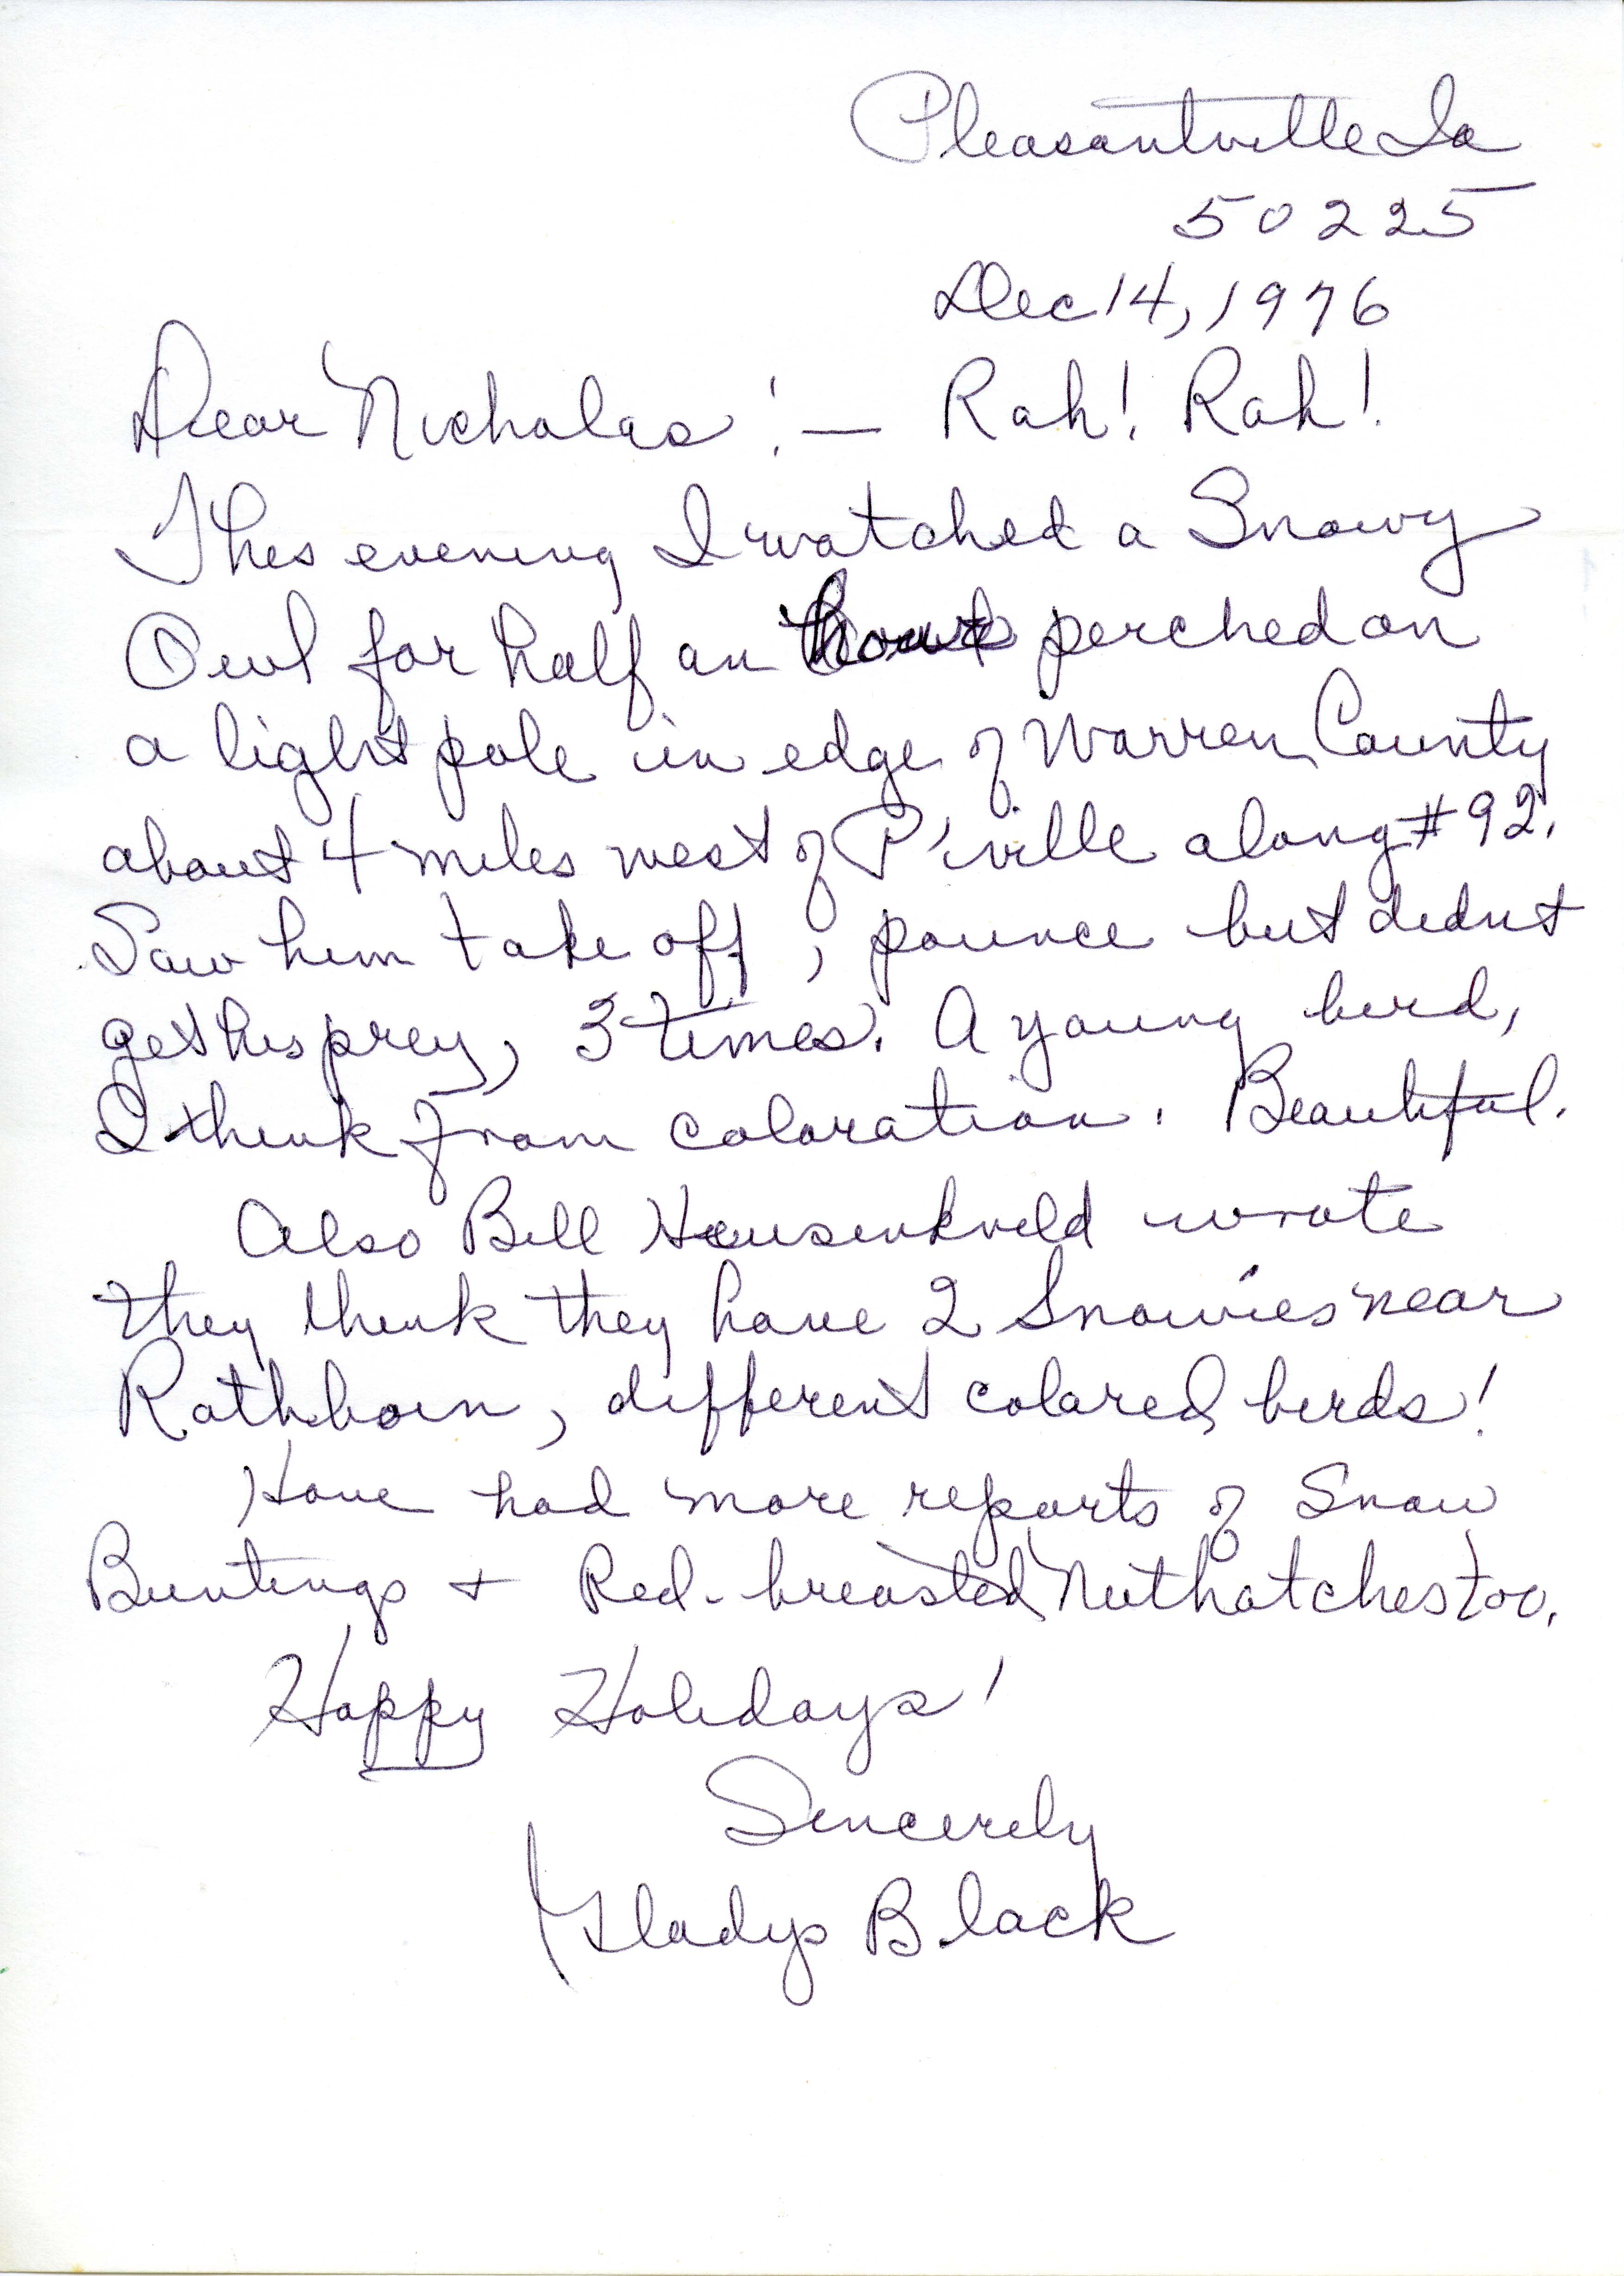 Gladys Black letter to Nicholas S. Halmi regarding bird sightings, December 14, 1976